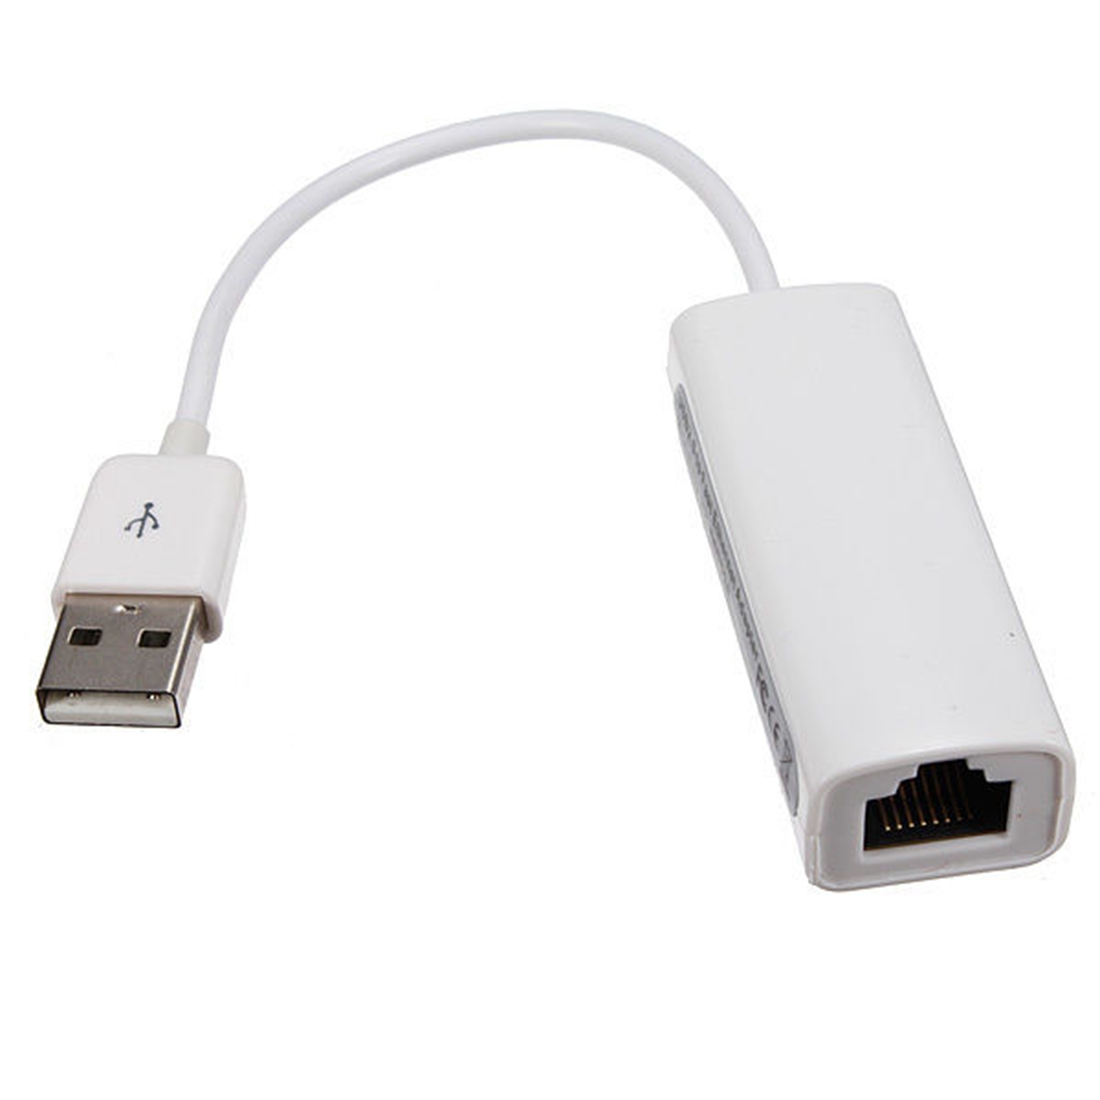 Usb 2.0 Naar RJ45 Lan Ethernet Network Adapter Voor Apple Mac Macbook Air Laptop Pc